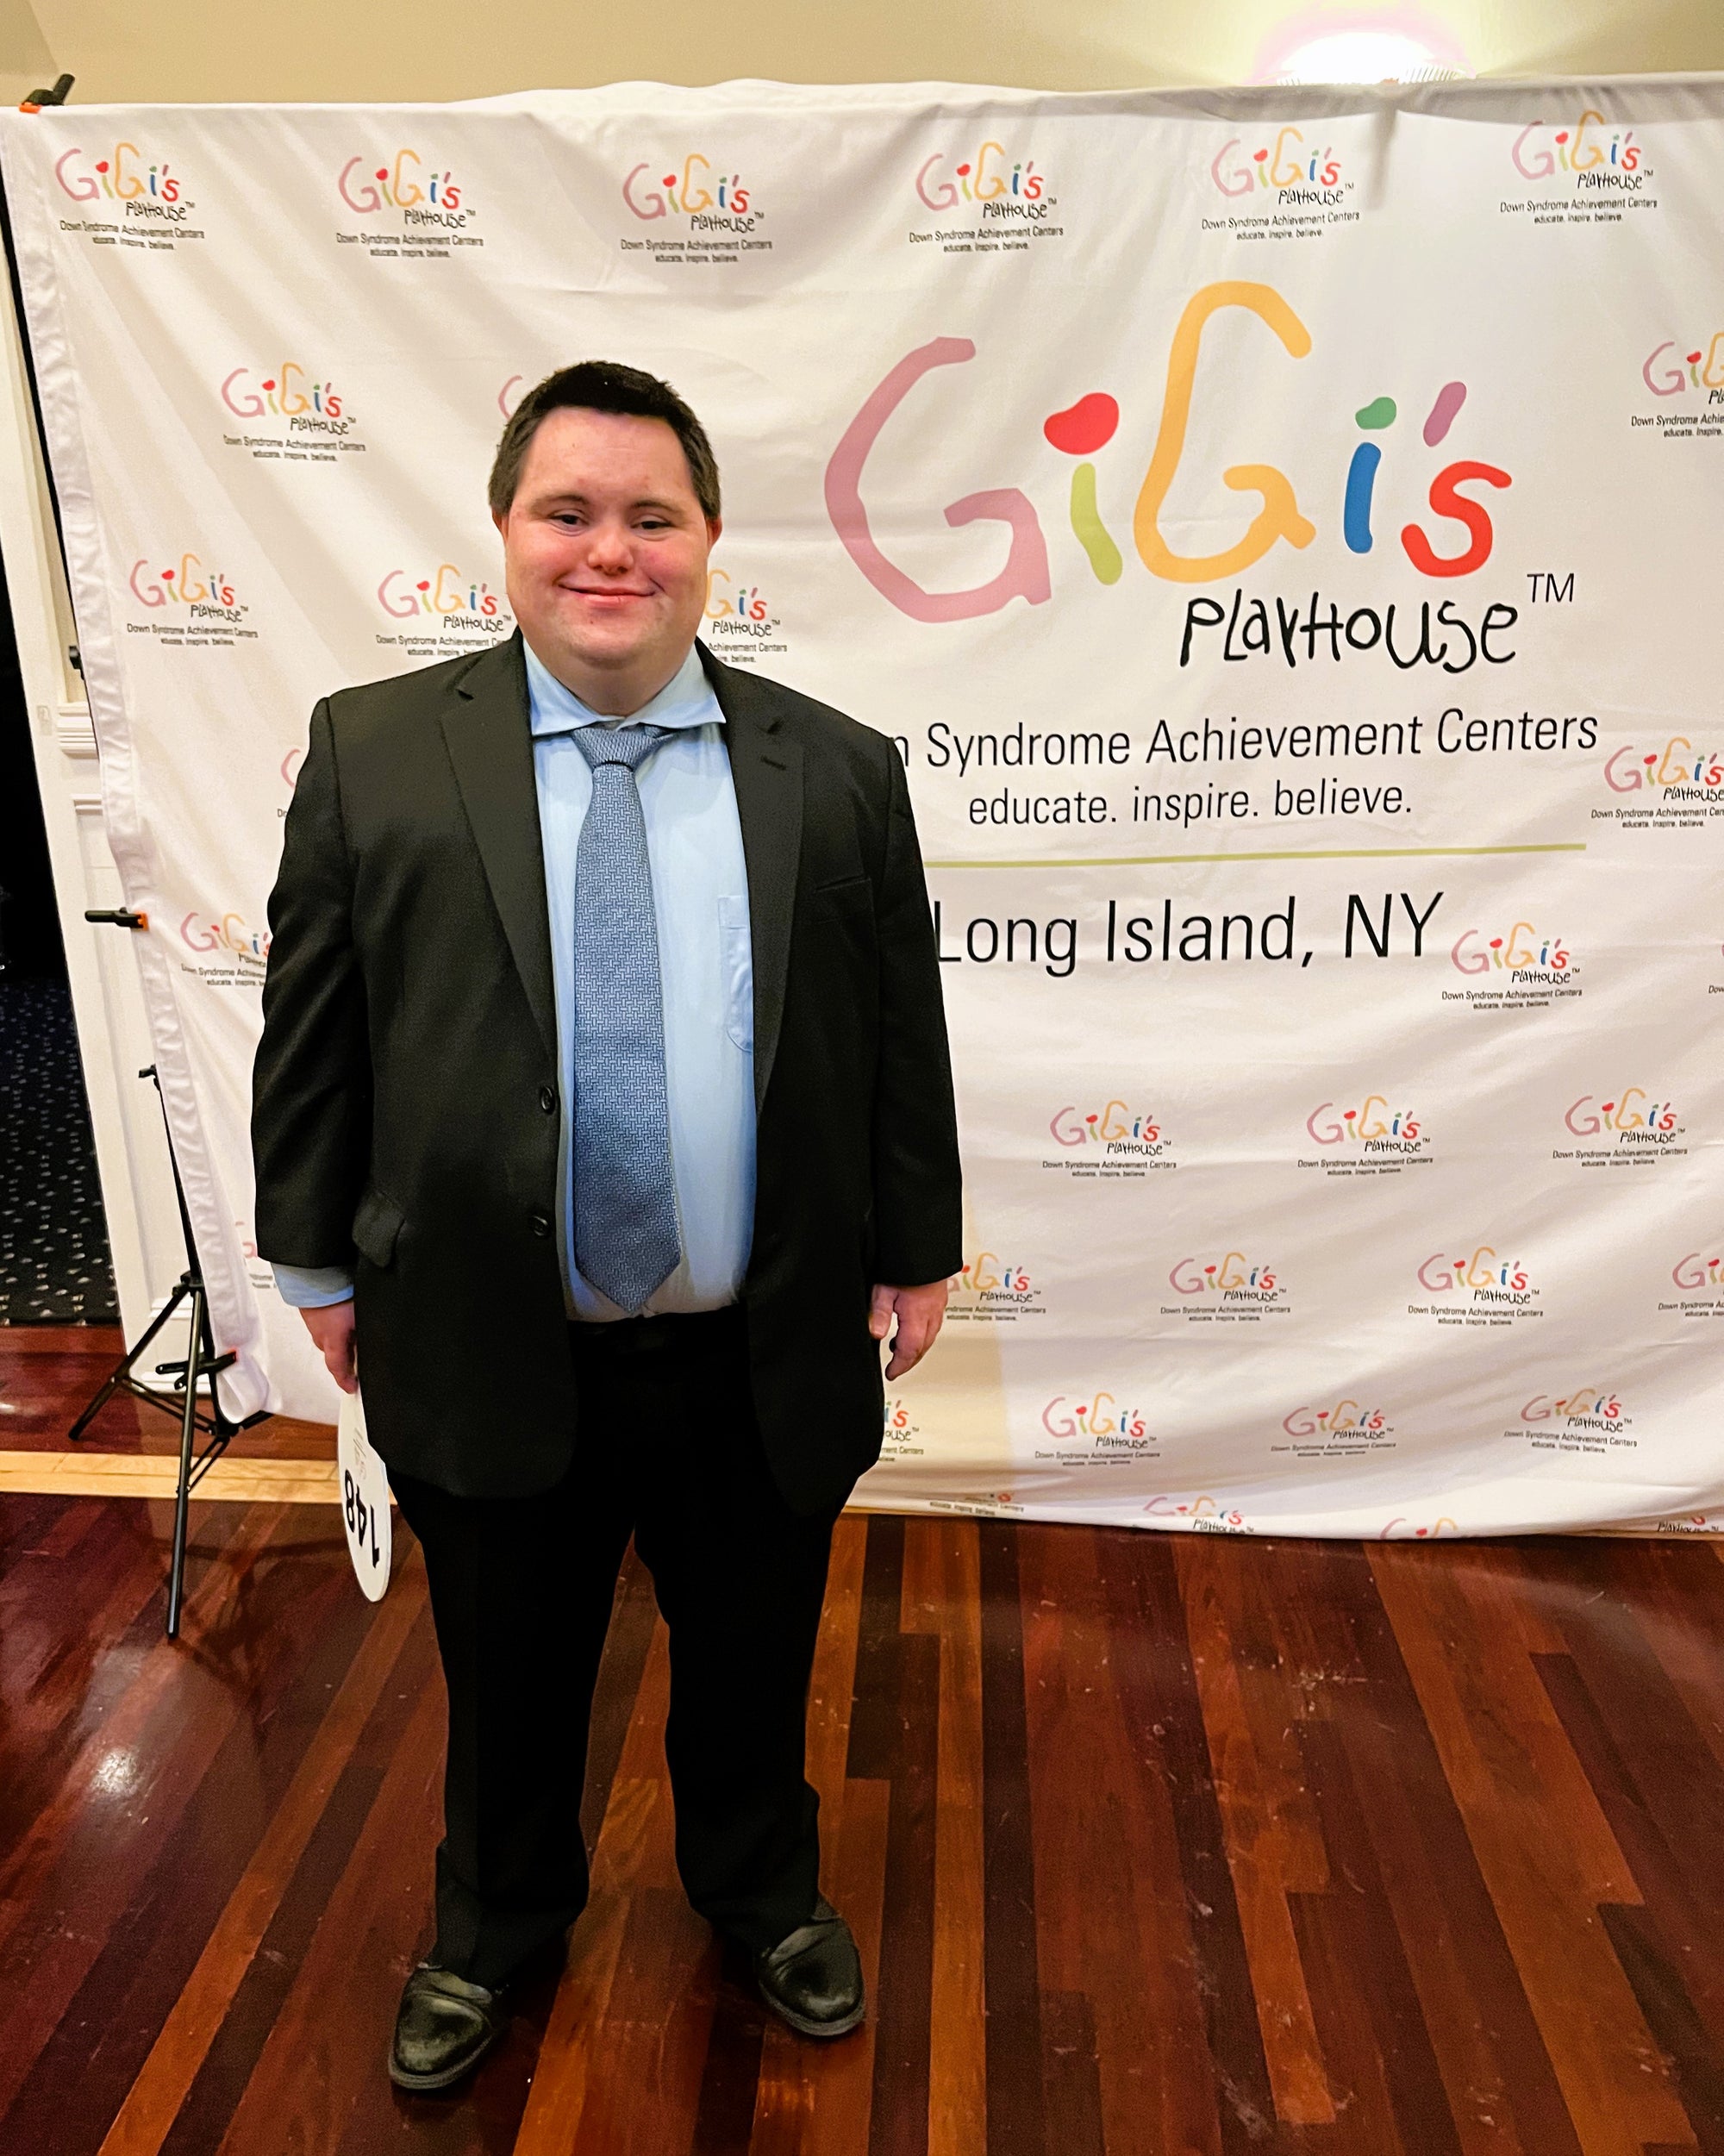 John’s Crazy Socks Celebrates Gigi’s Playhouse – Long Island at Their Annual Gala